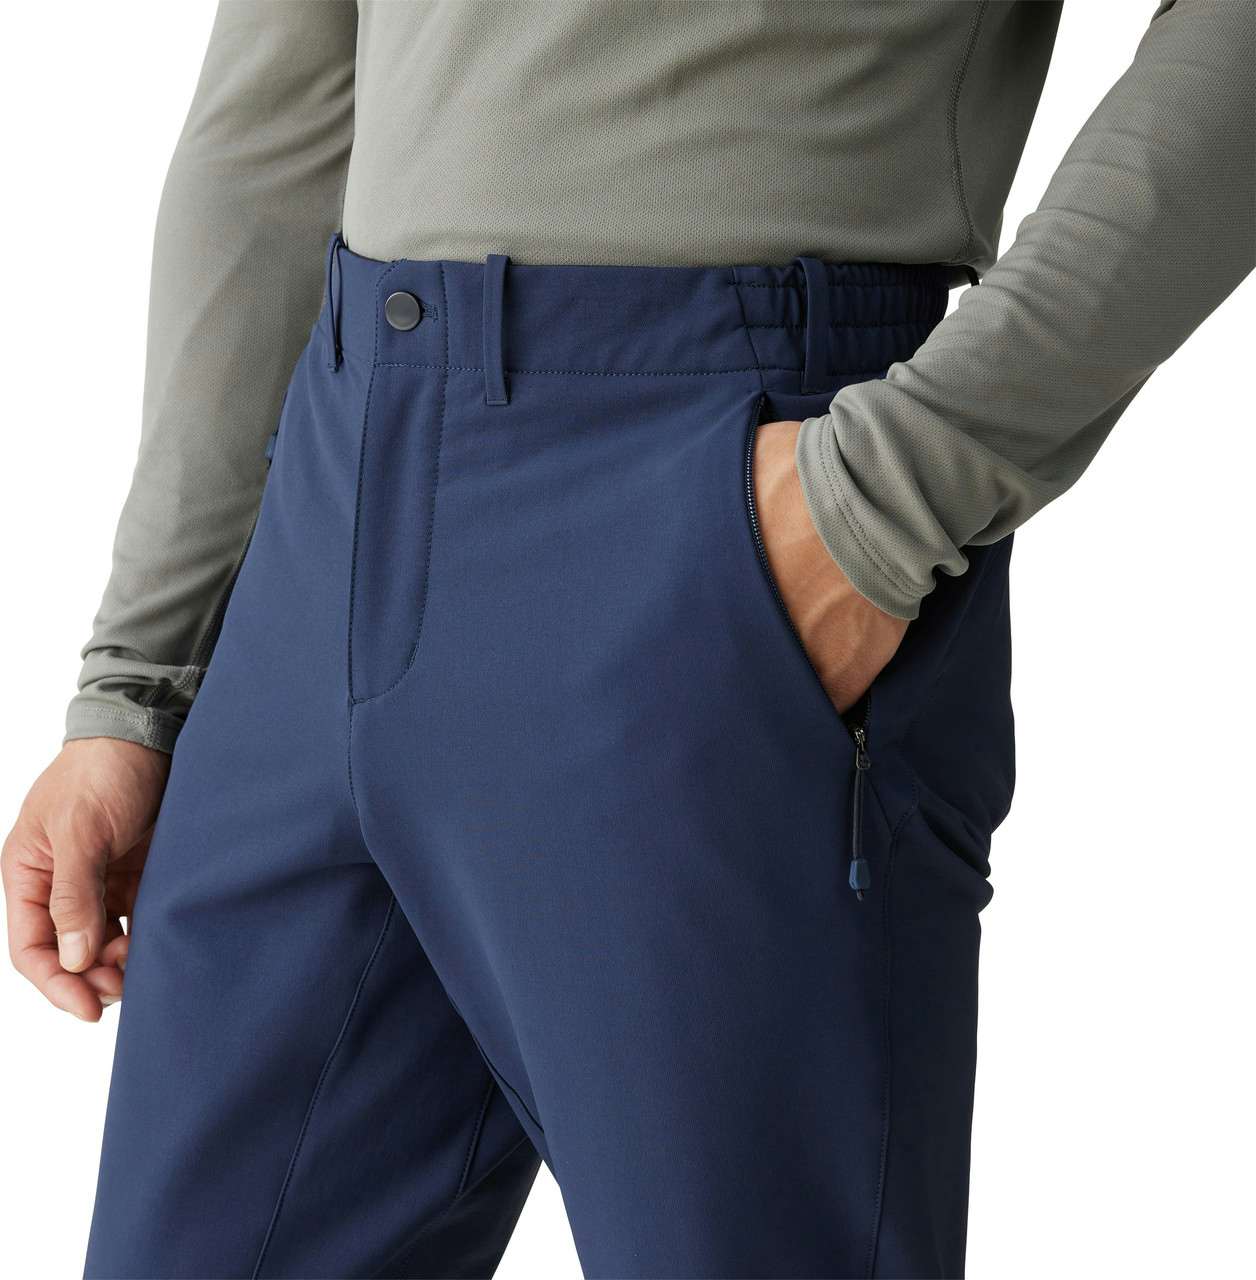 Pantalon coquille souple Tobo Grège